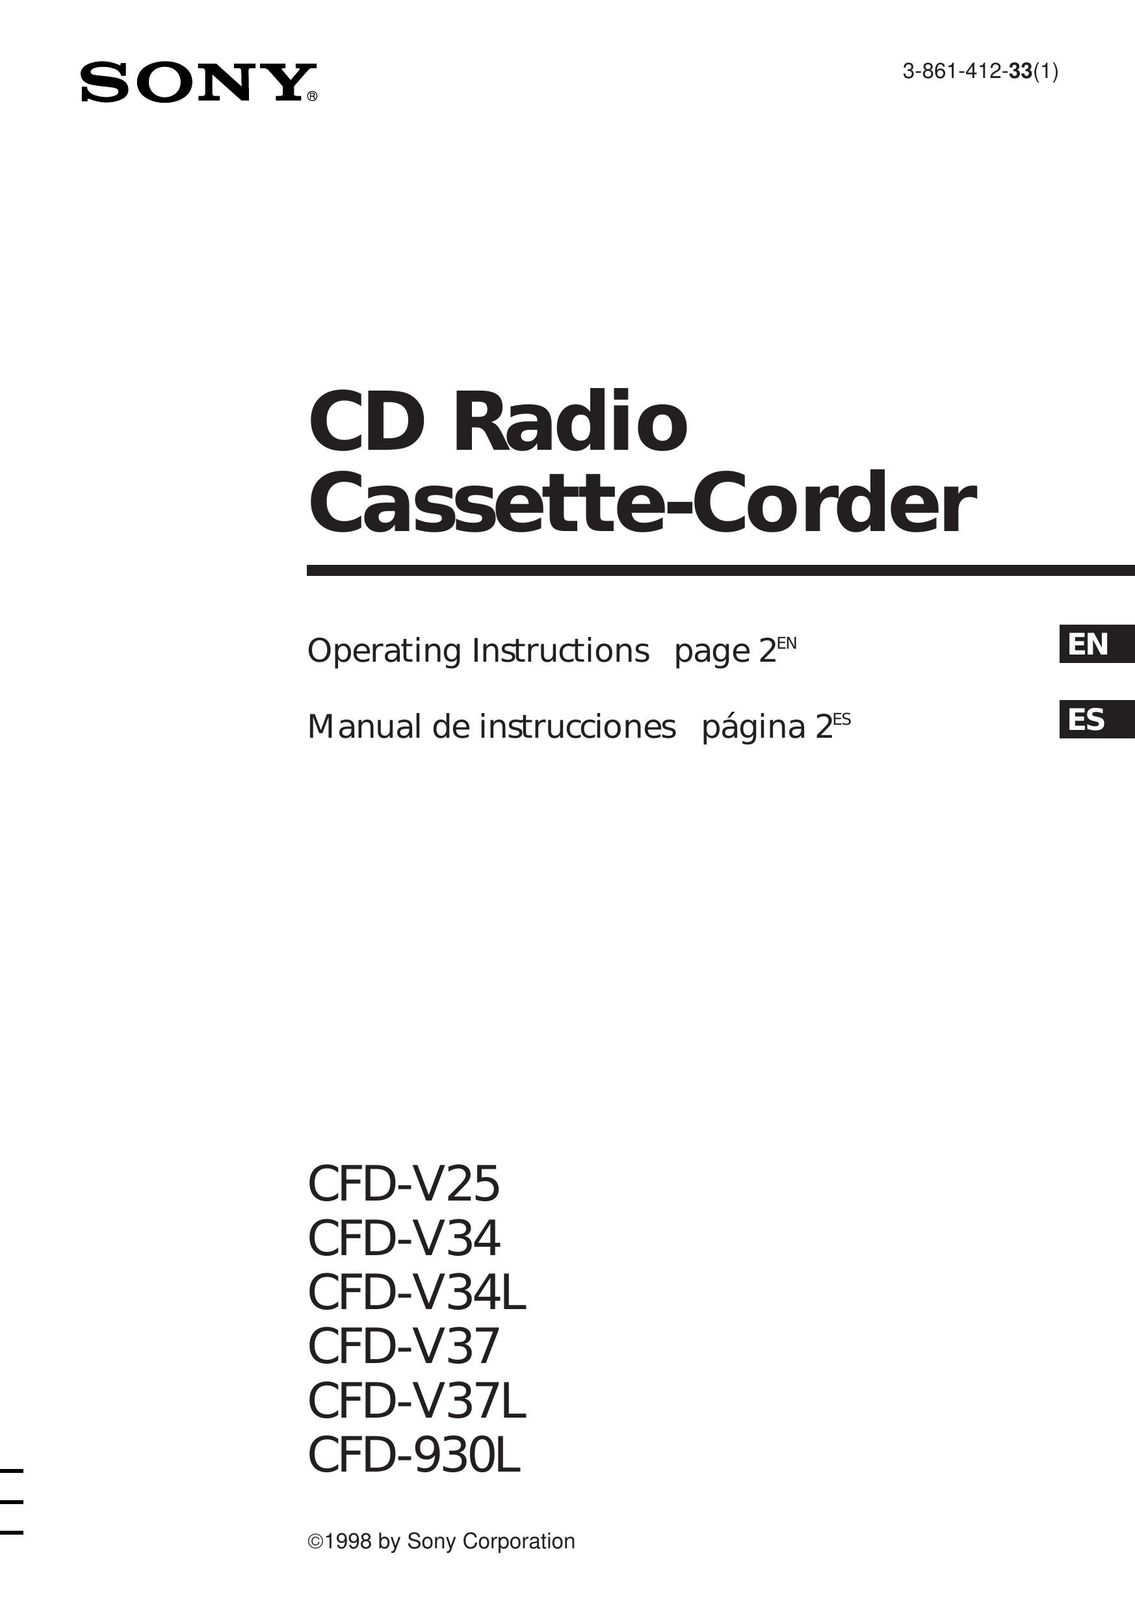 Sony CFD-V34L Cassette Player User Manual